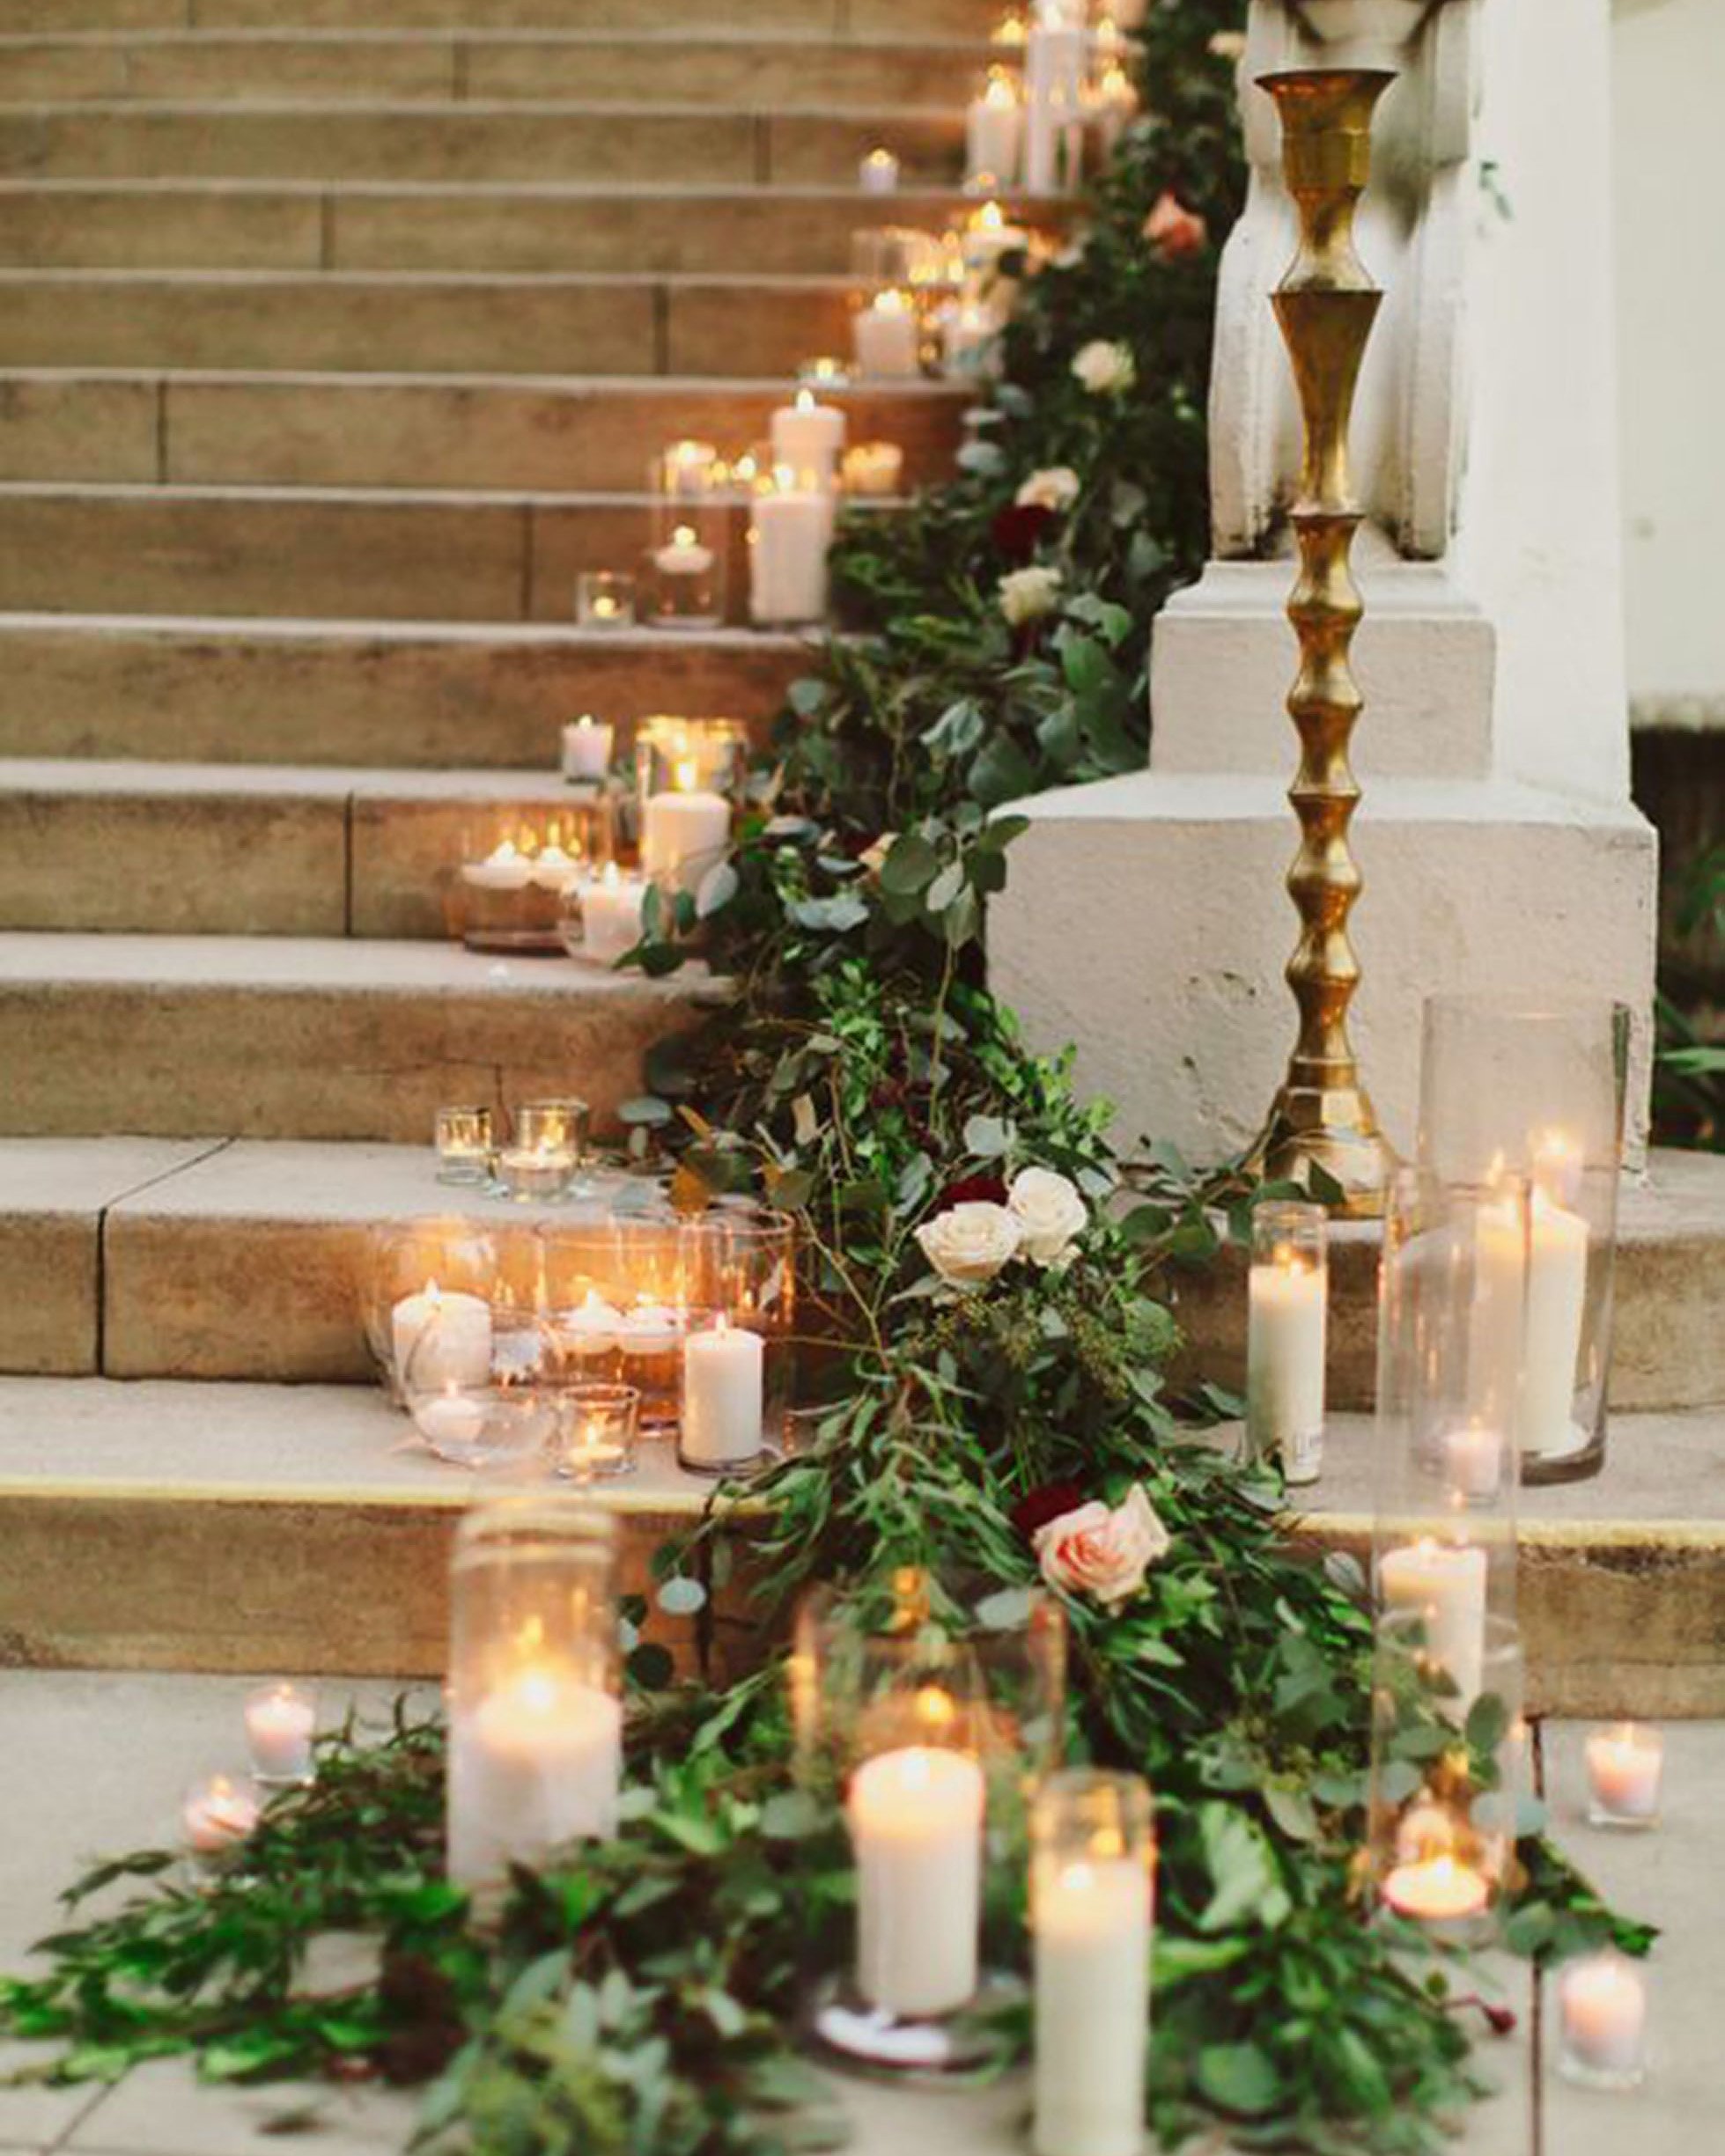 greenery wedding decor and candles roses on stairs damarismiaphoto